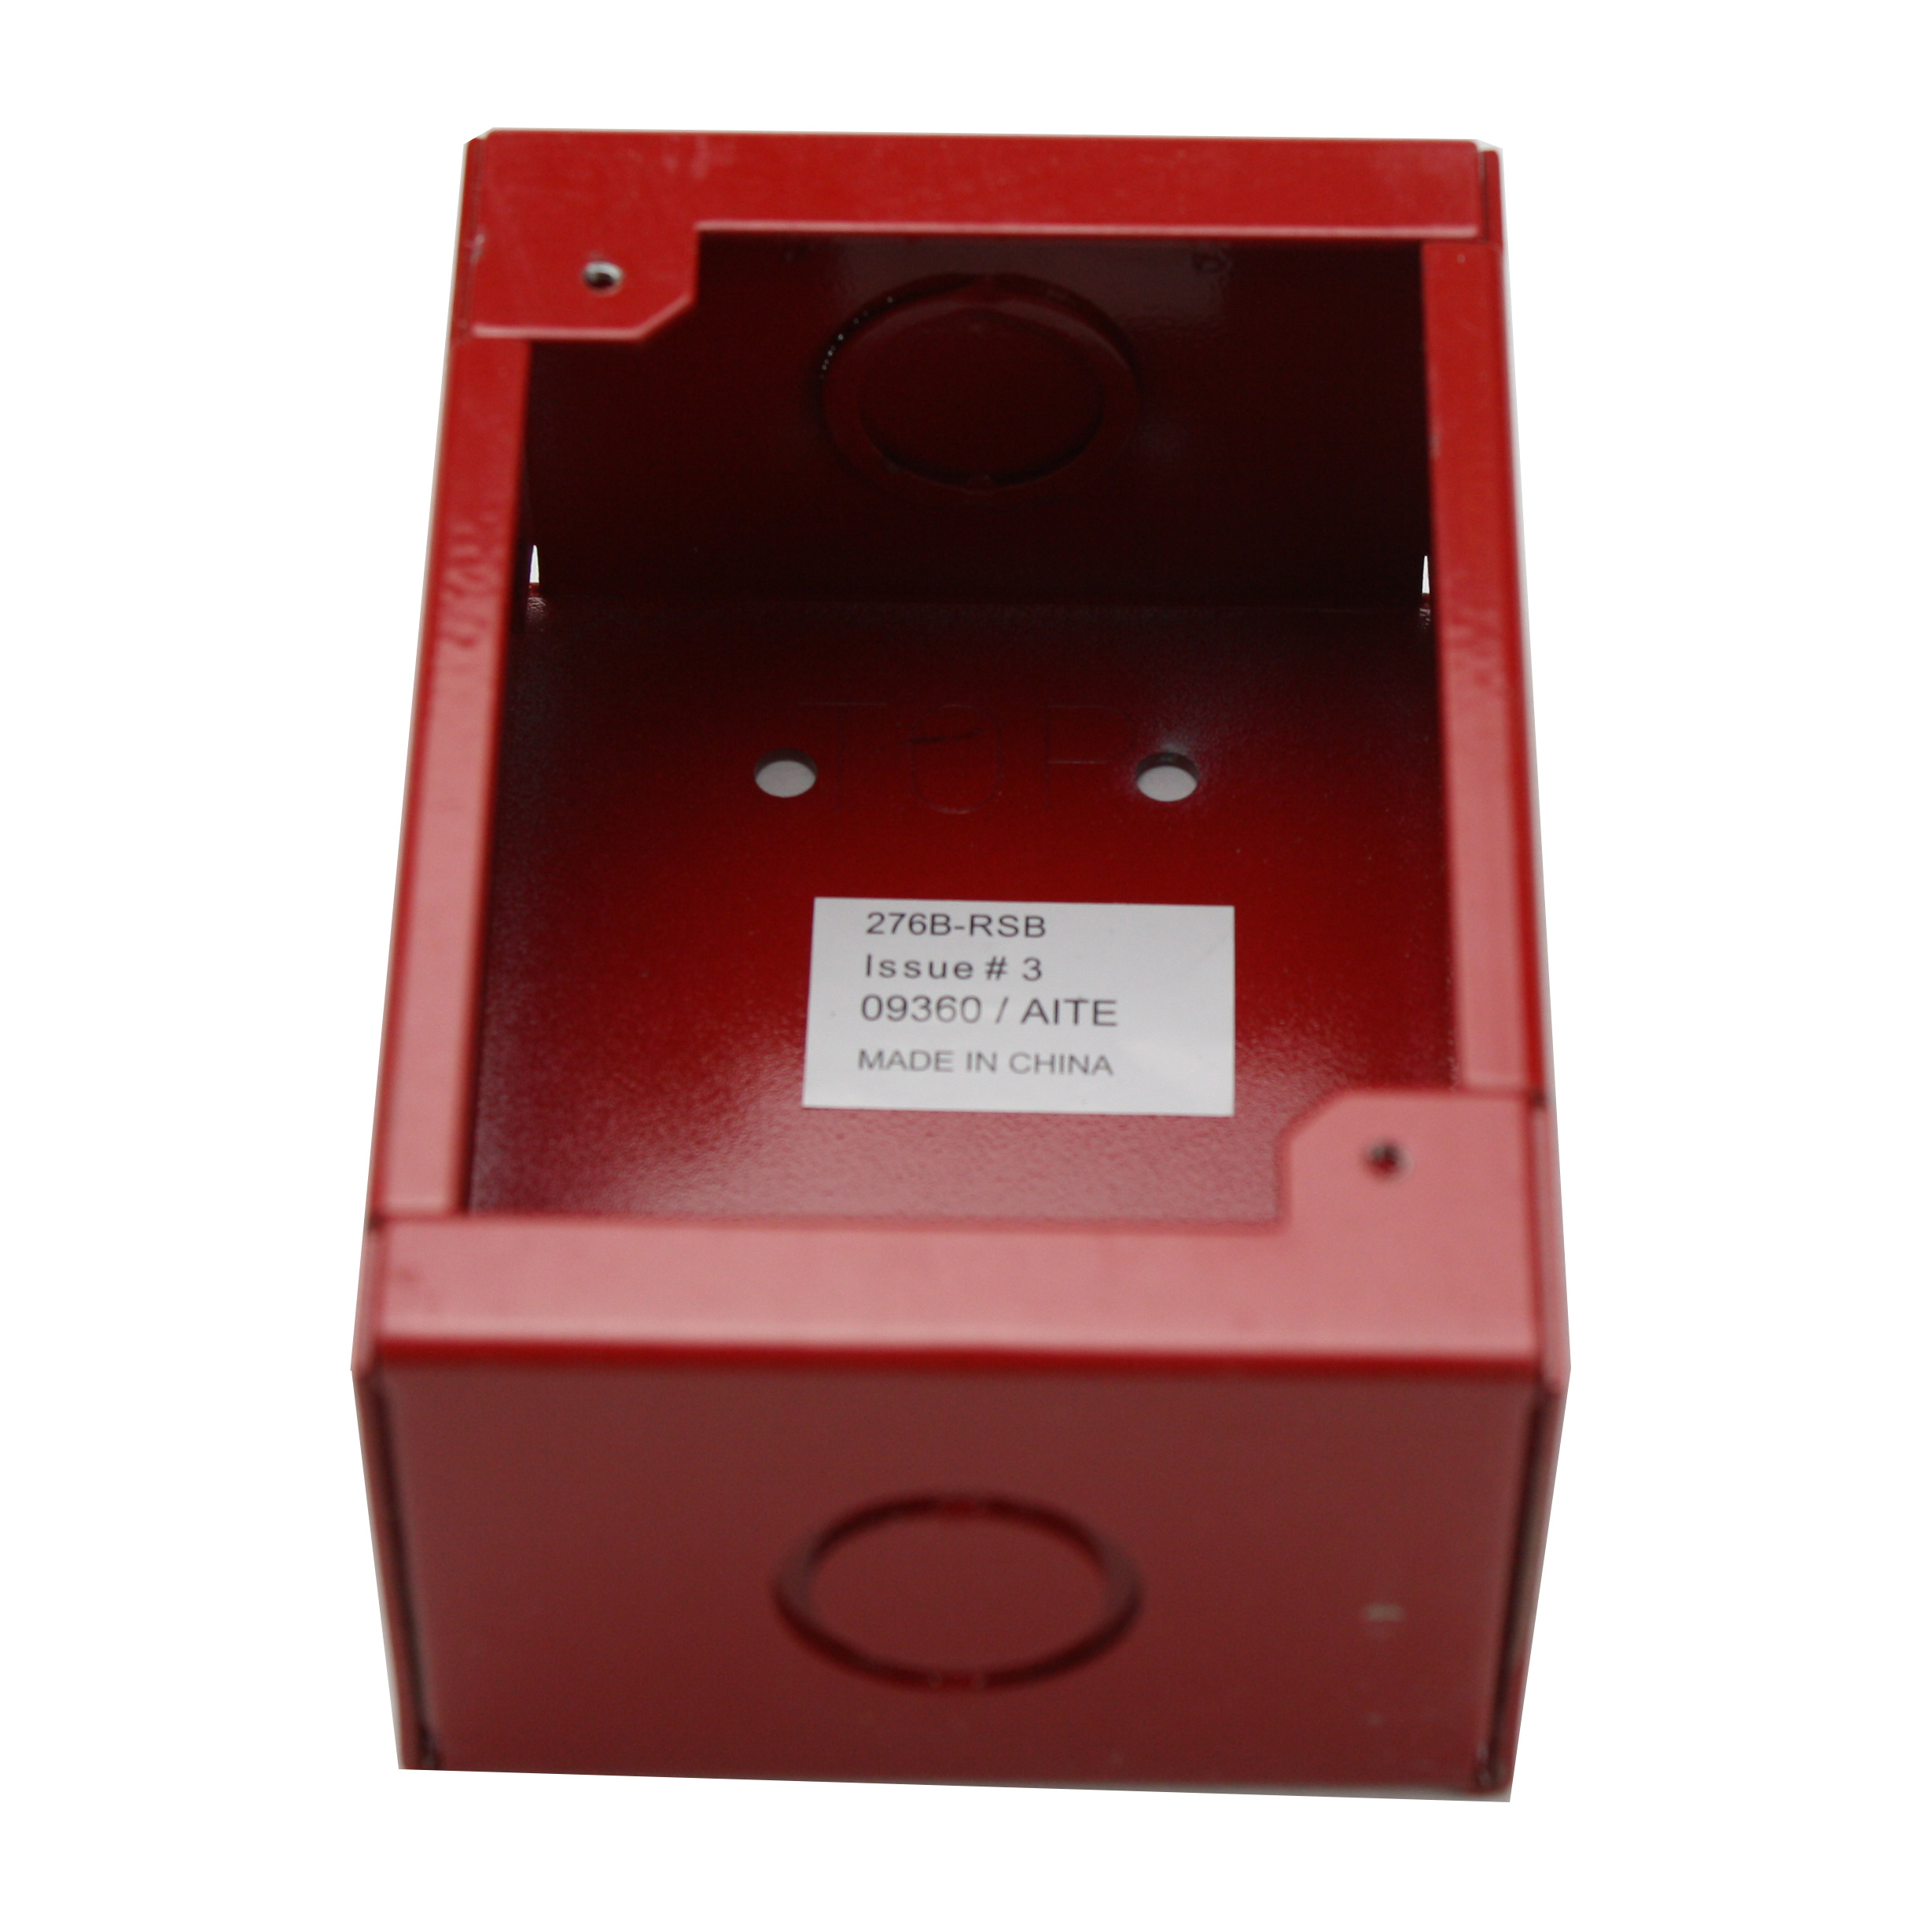 charles industries red alarm box